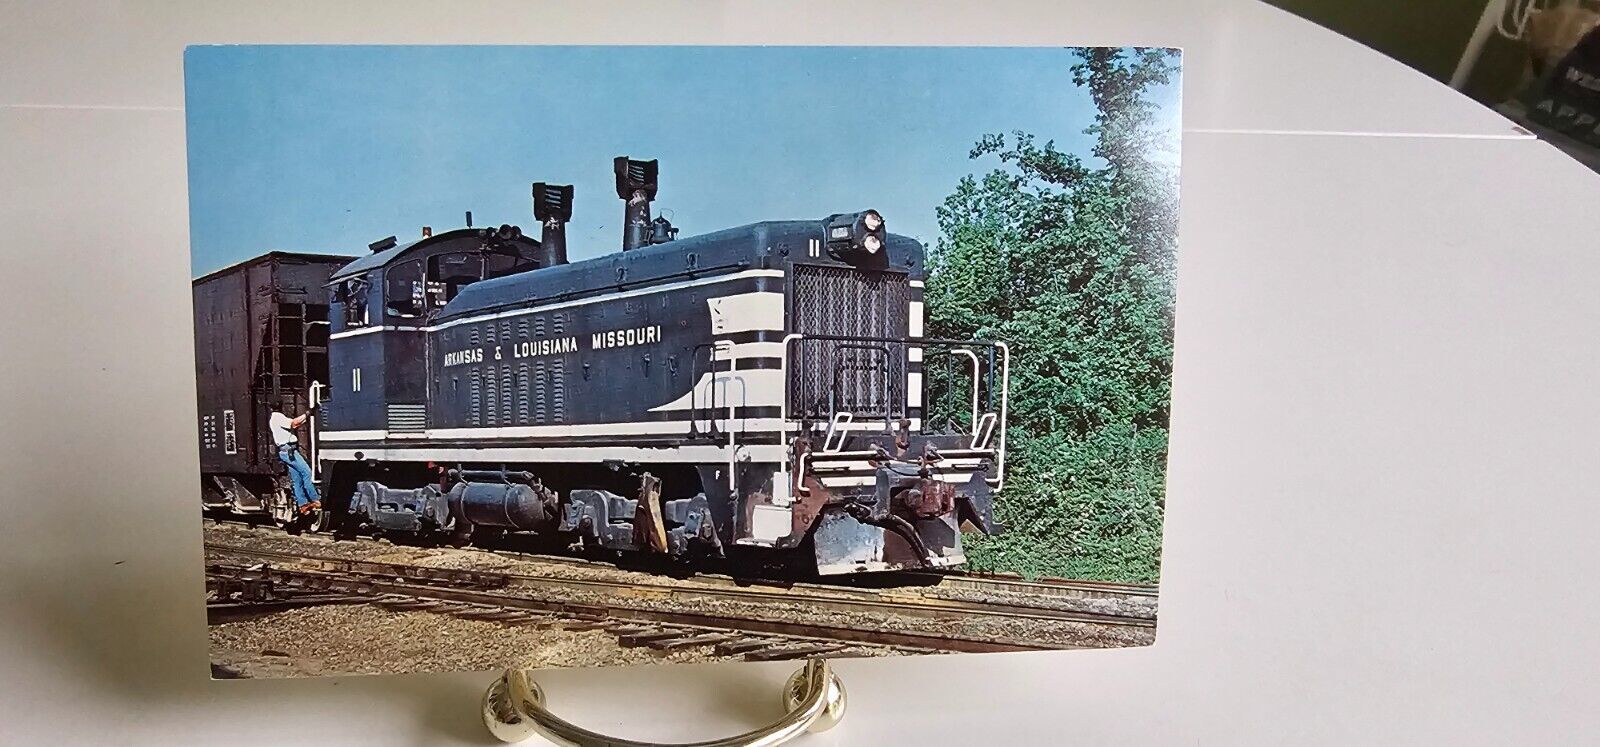 Arkansas Louisiana Missouri 11 Diesel Engine Locomotive Postcard Train Railroad